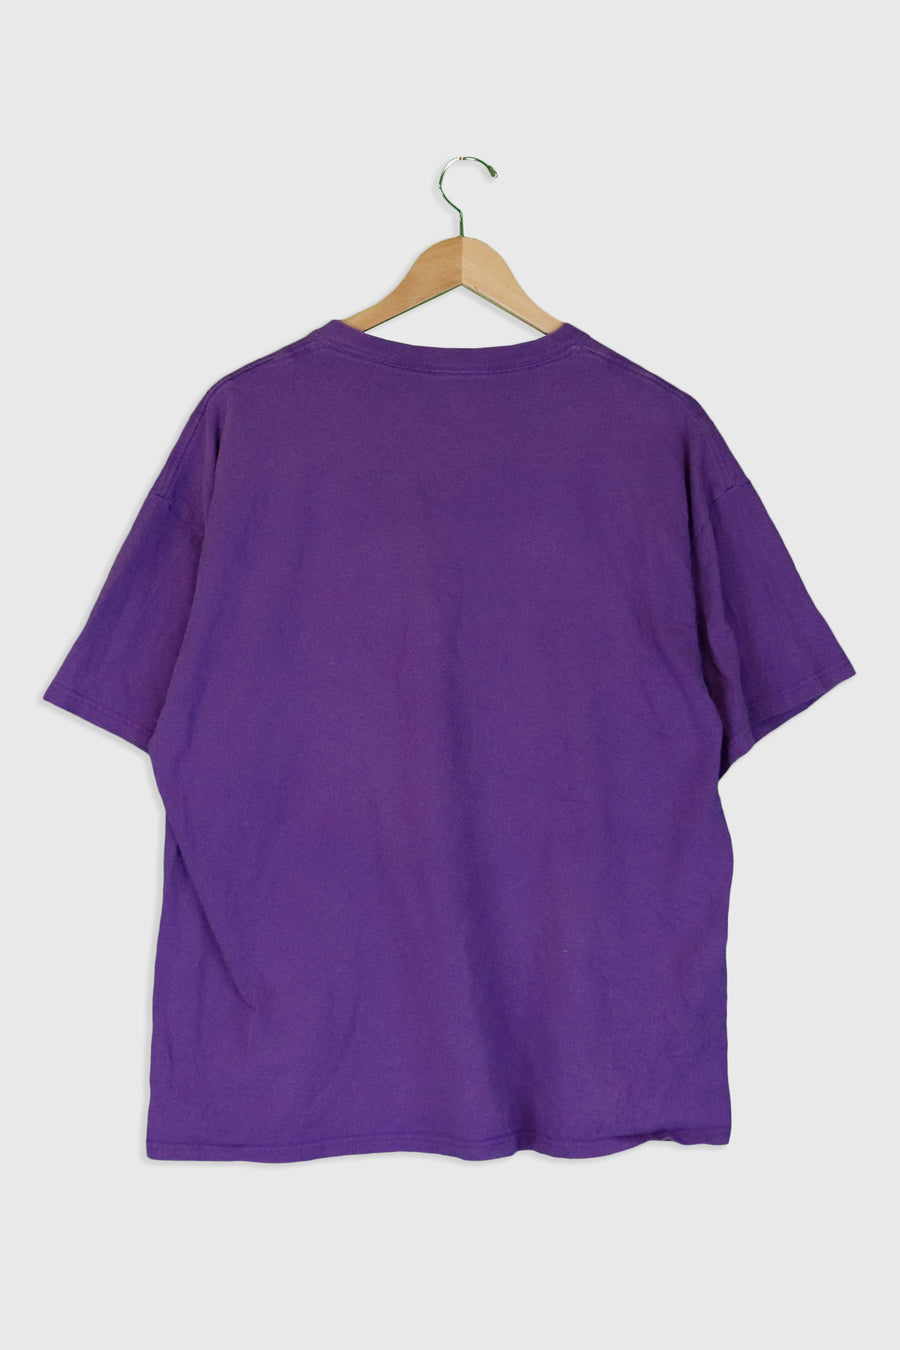 Vintage Kool-Aid Man T Shirt Sz XL